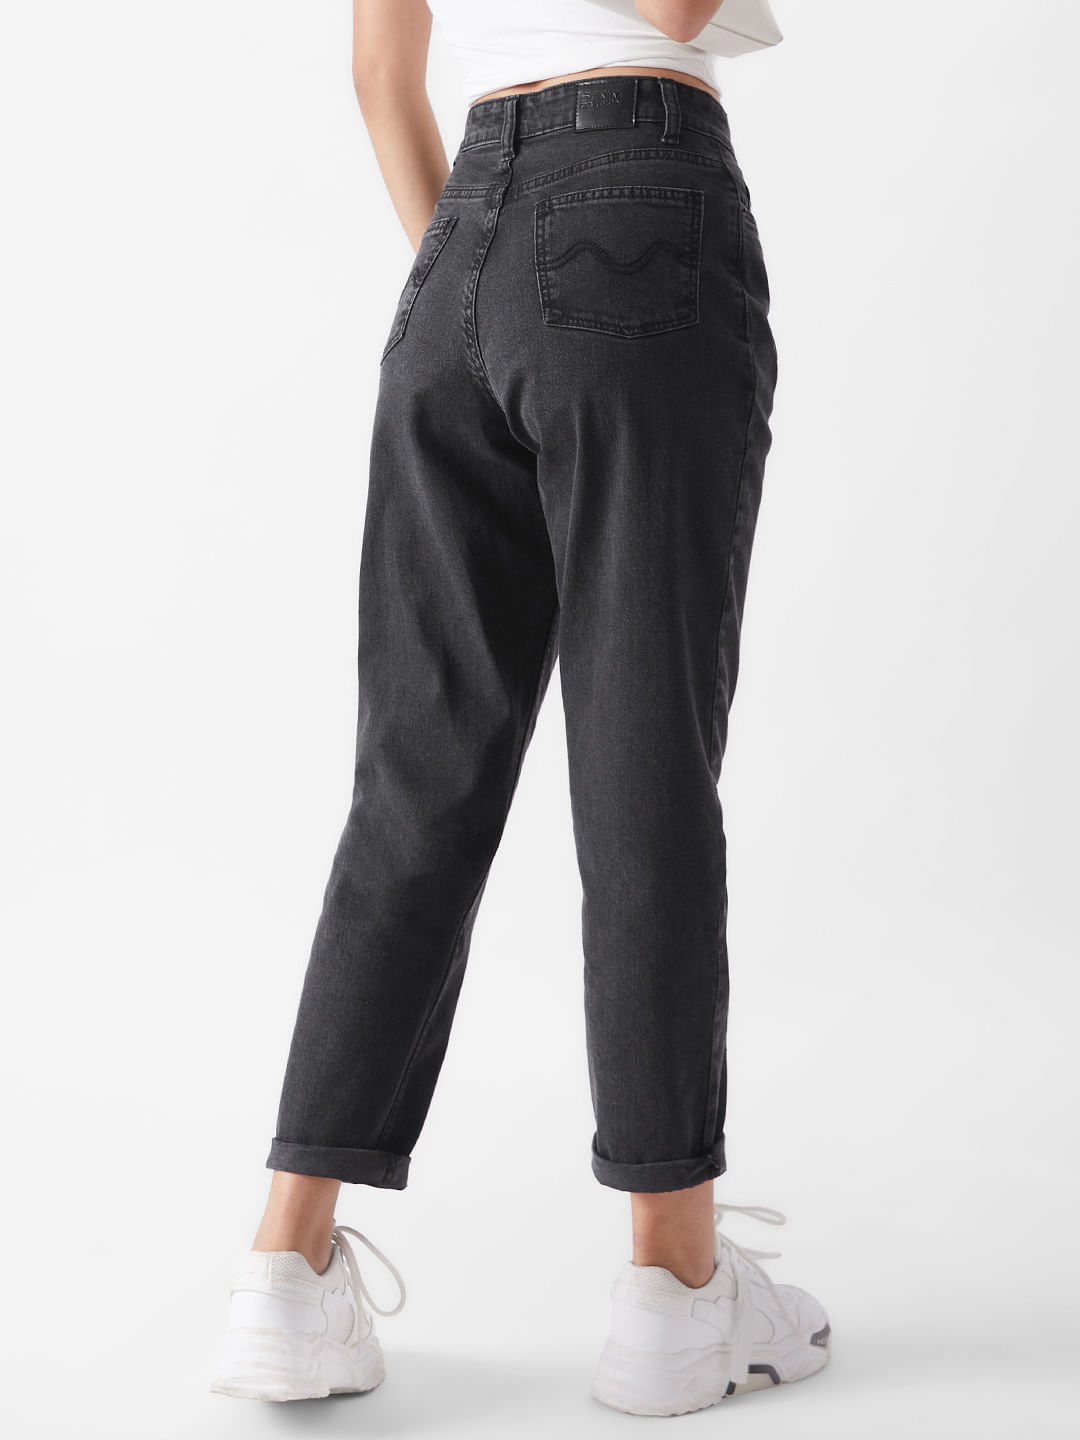 Buy Solids: Carbon Black (Mom Fit) Women Jeans Online